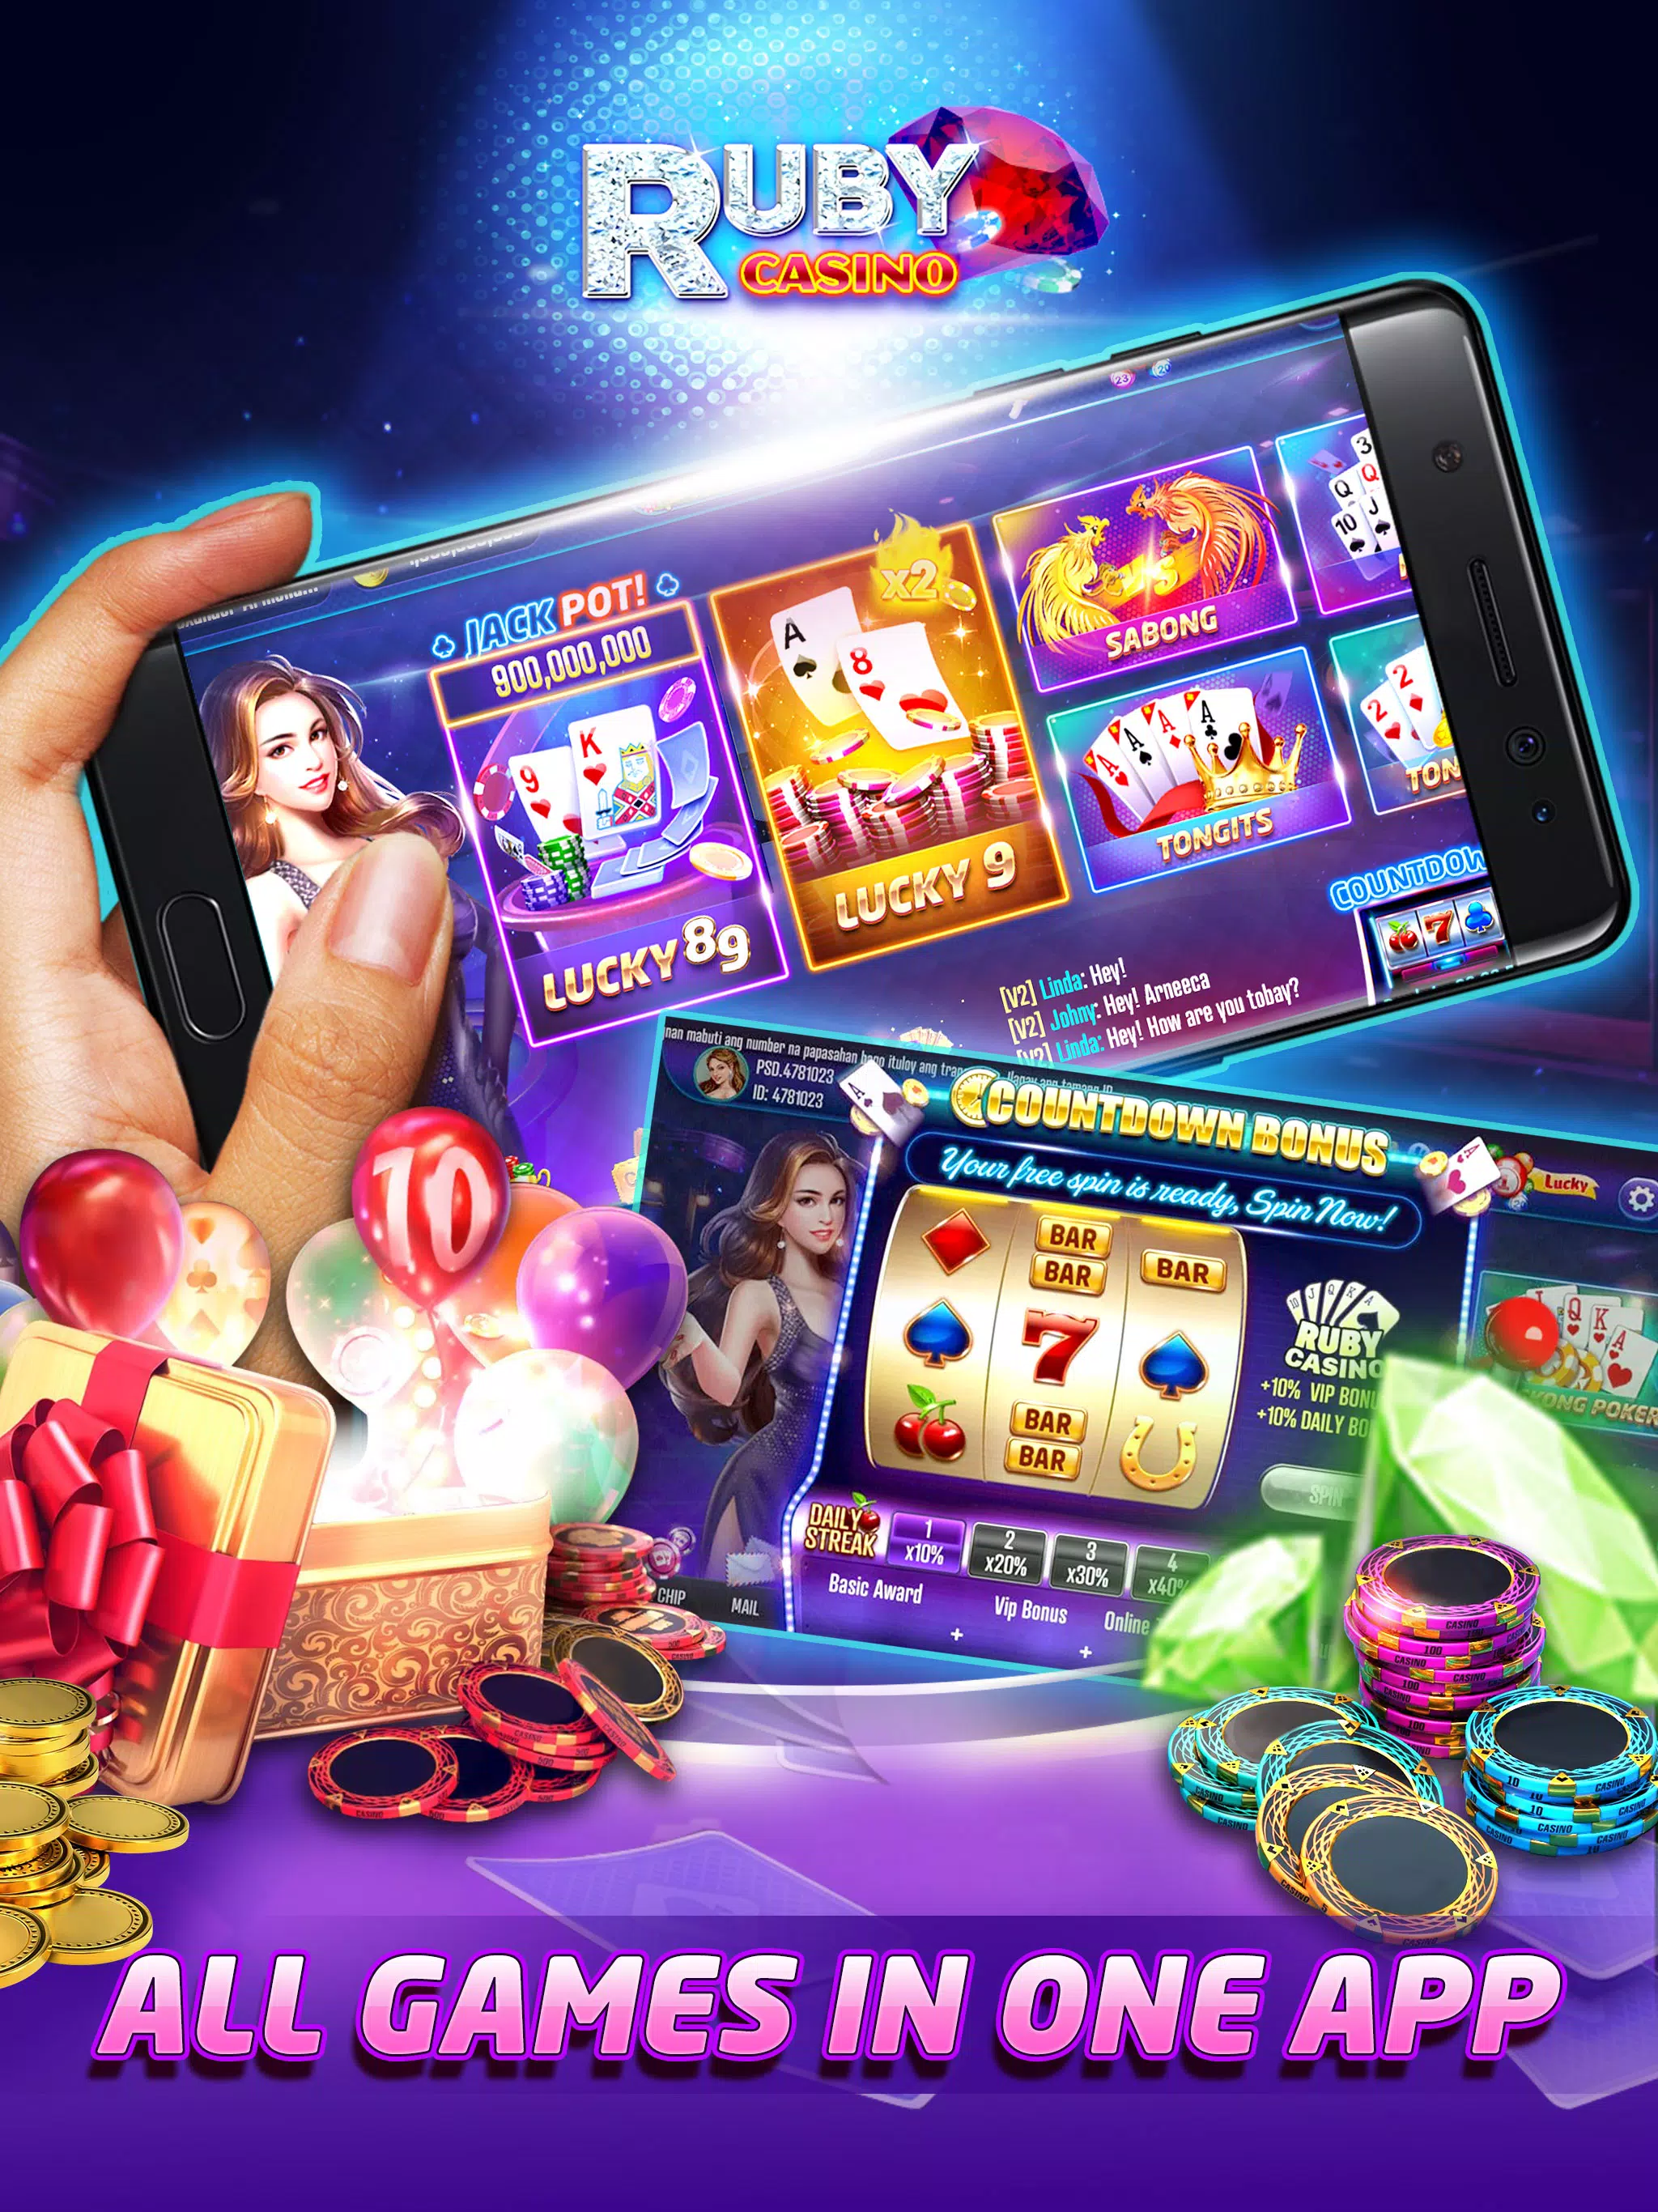 Ruby Casino - Tongits, Pusoy, Slots Screenshot1